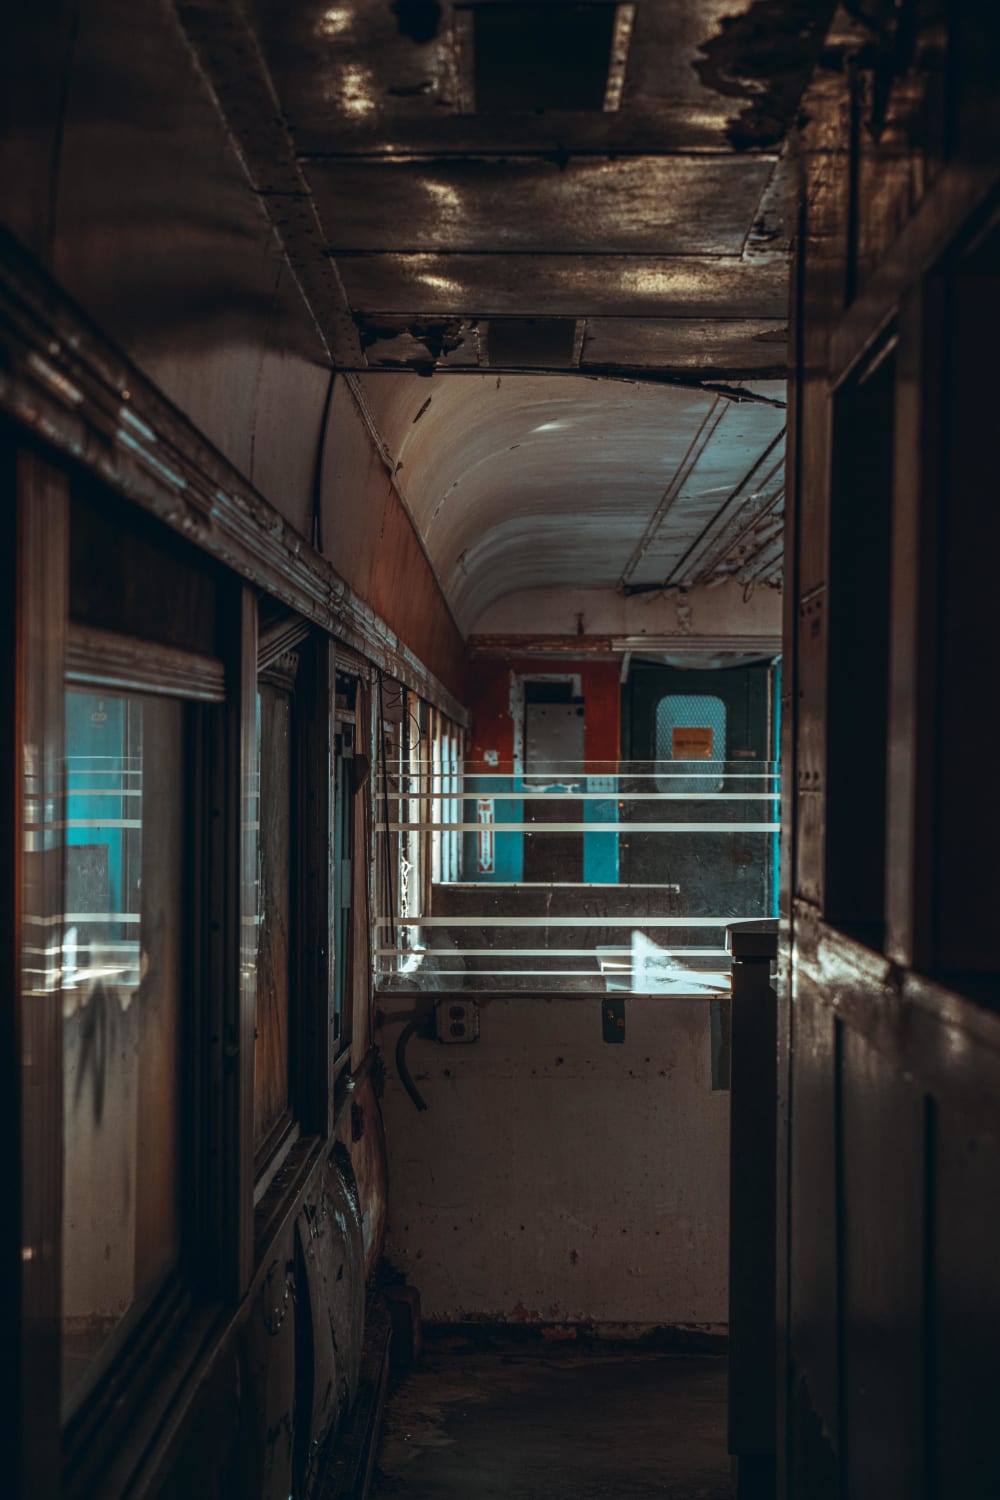 Abandoned diner train car